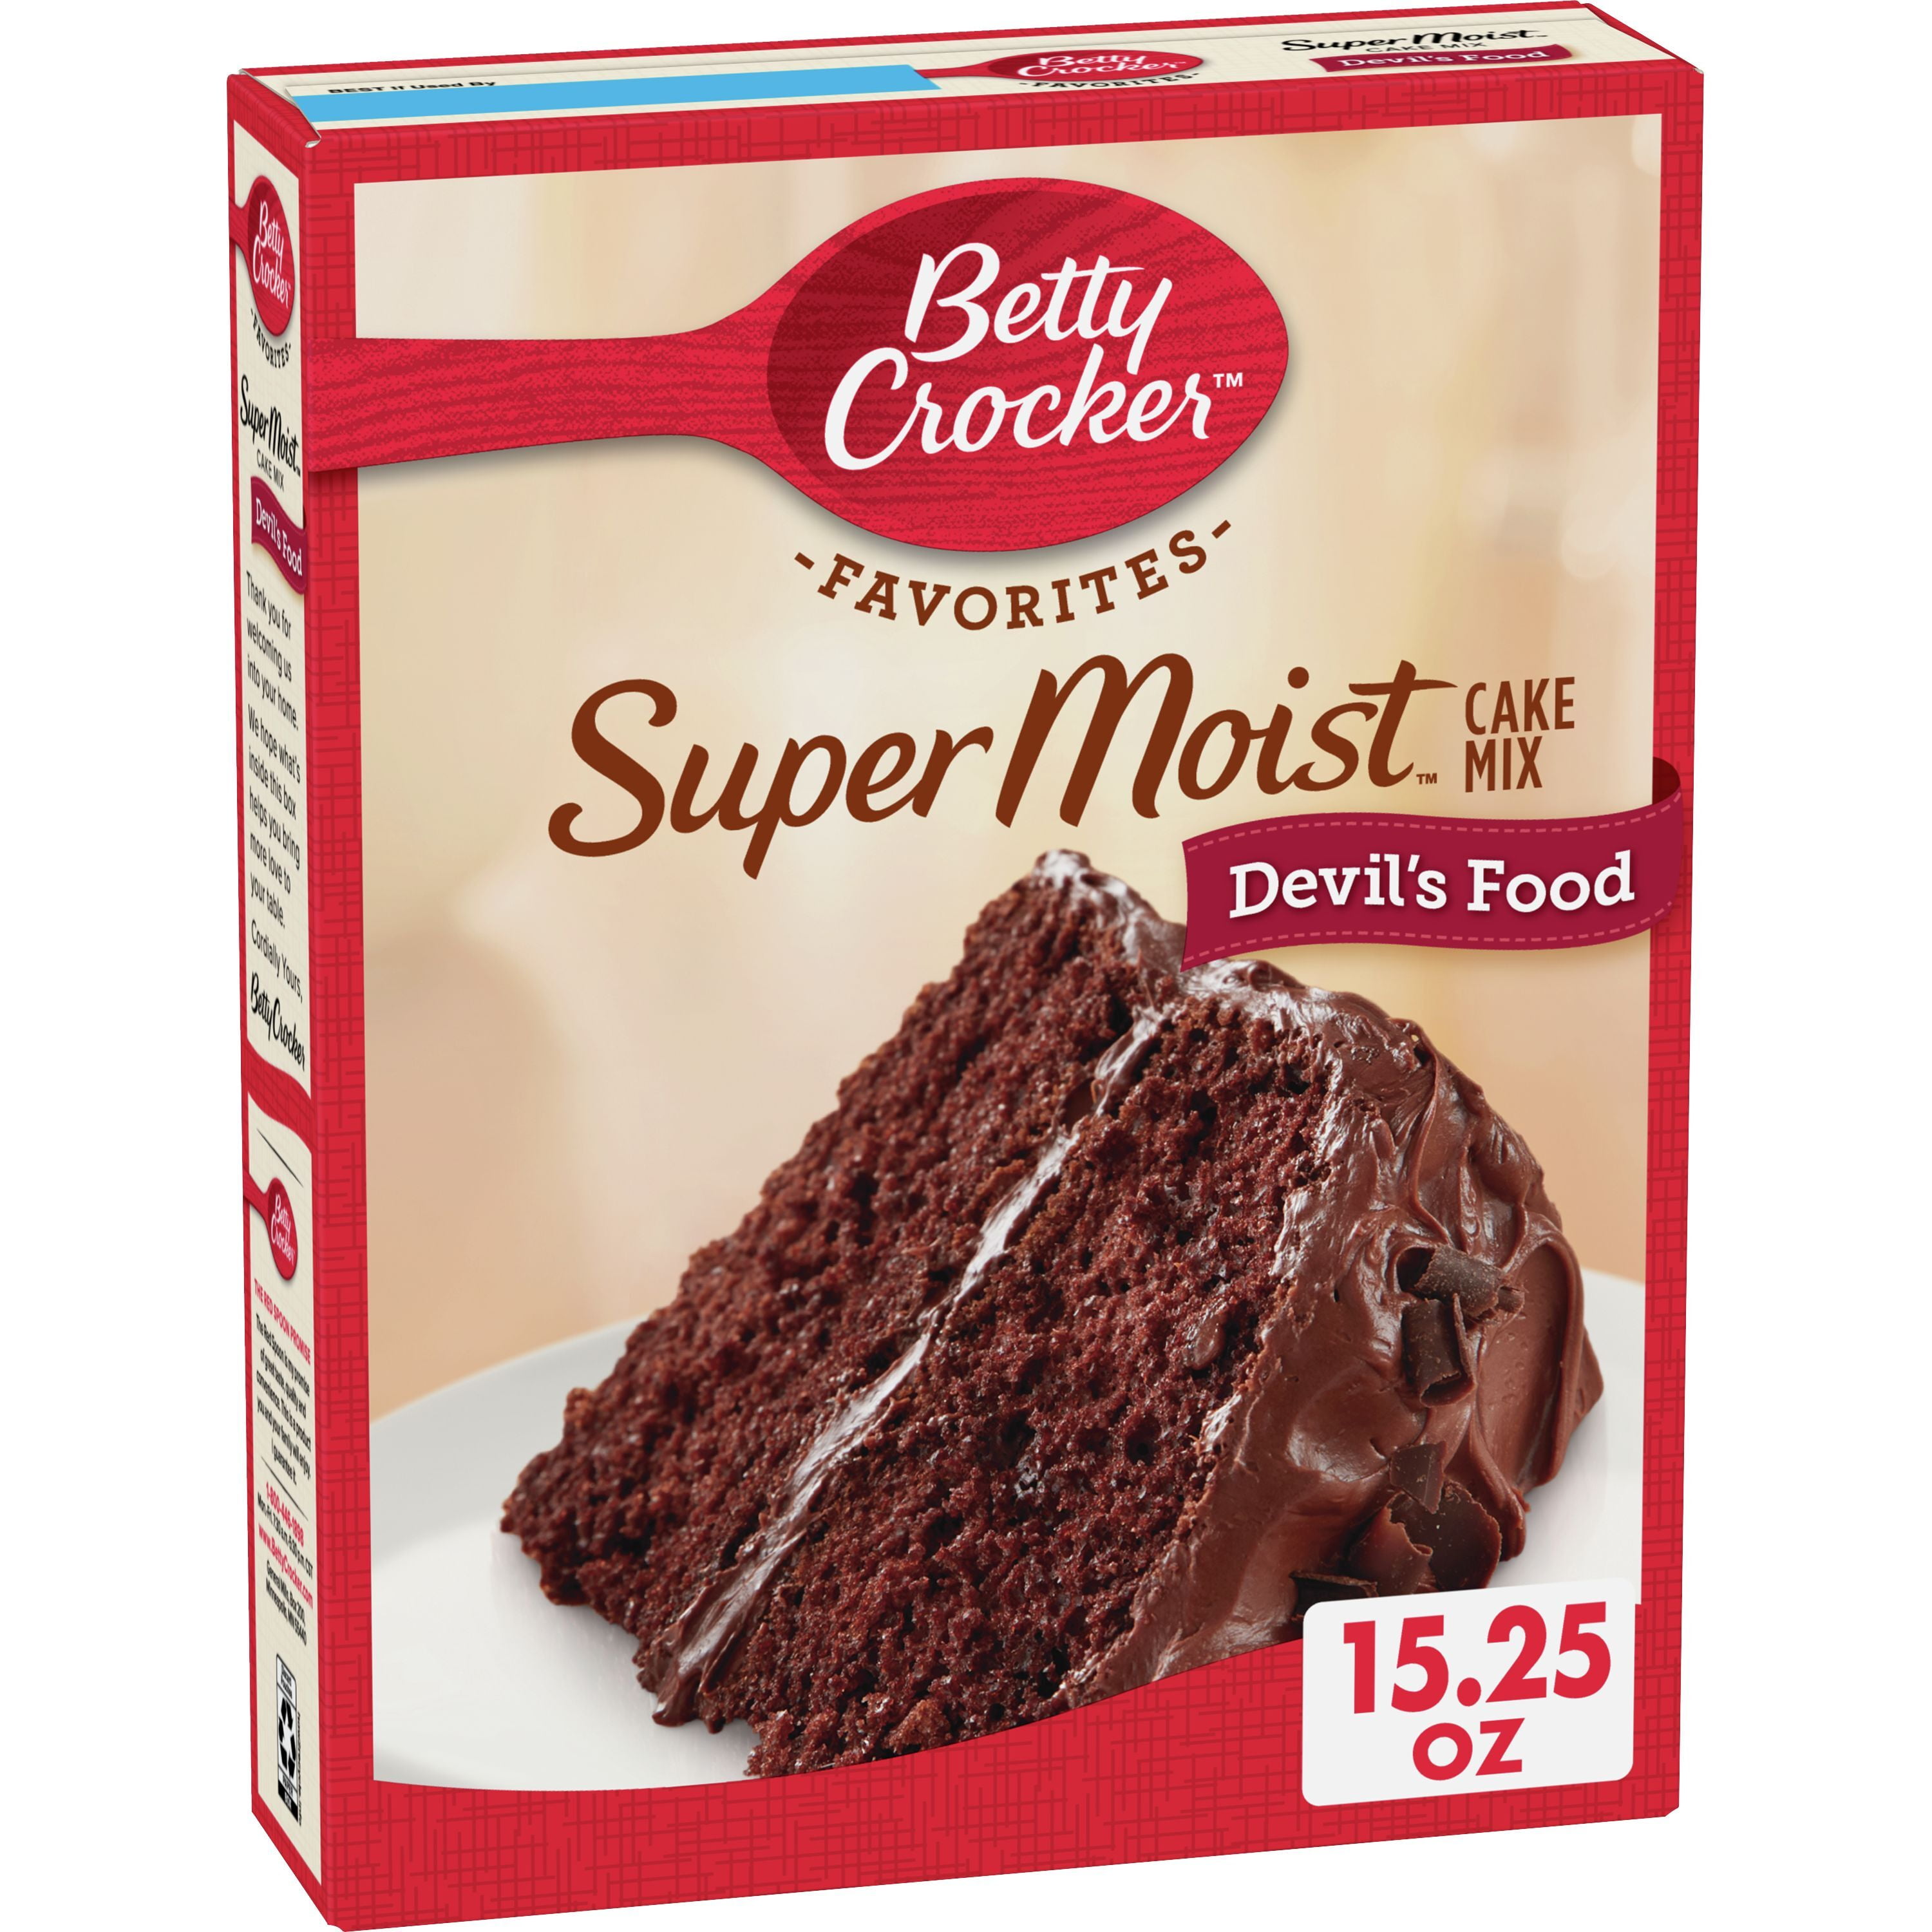 Crocker Super Moist Devil's Cake Mix, 15.25 oz - Walmart.com